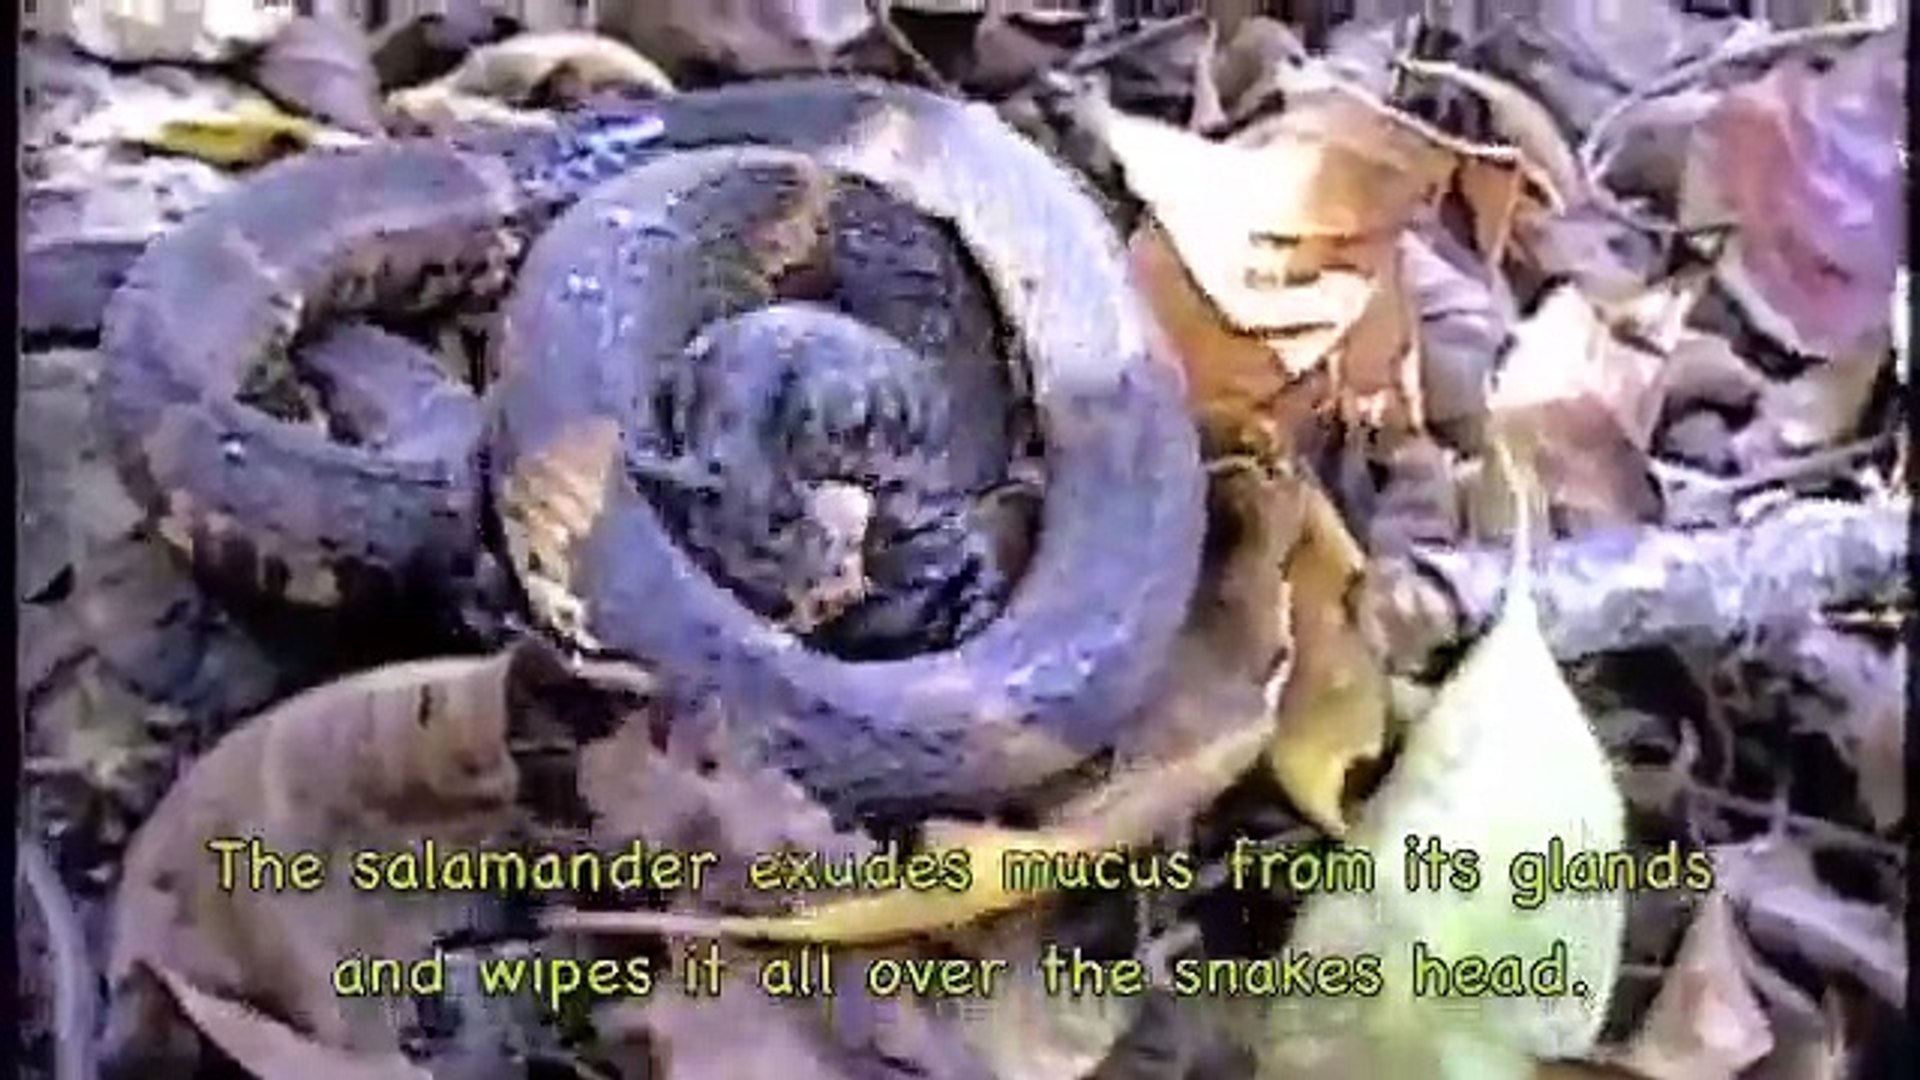 Salamander slimes Snake and escapes jaws